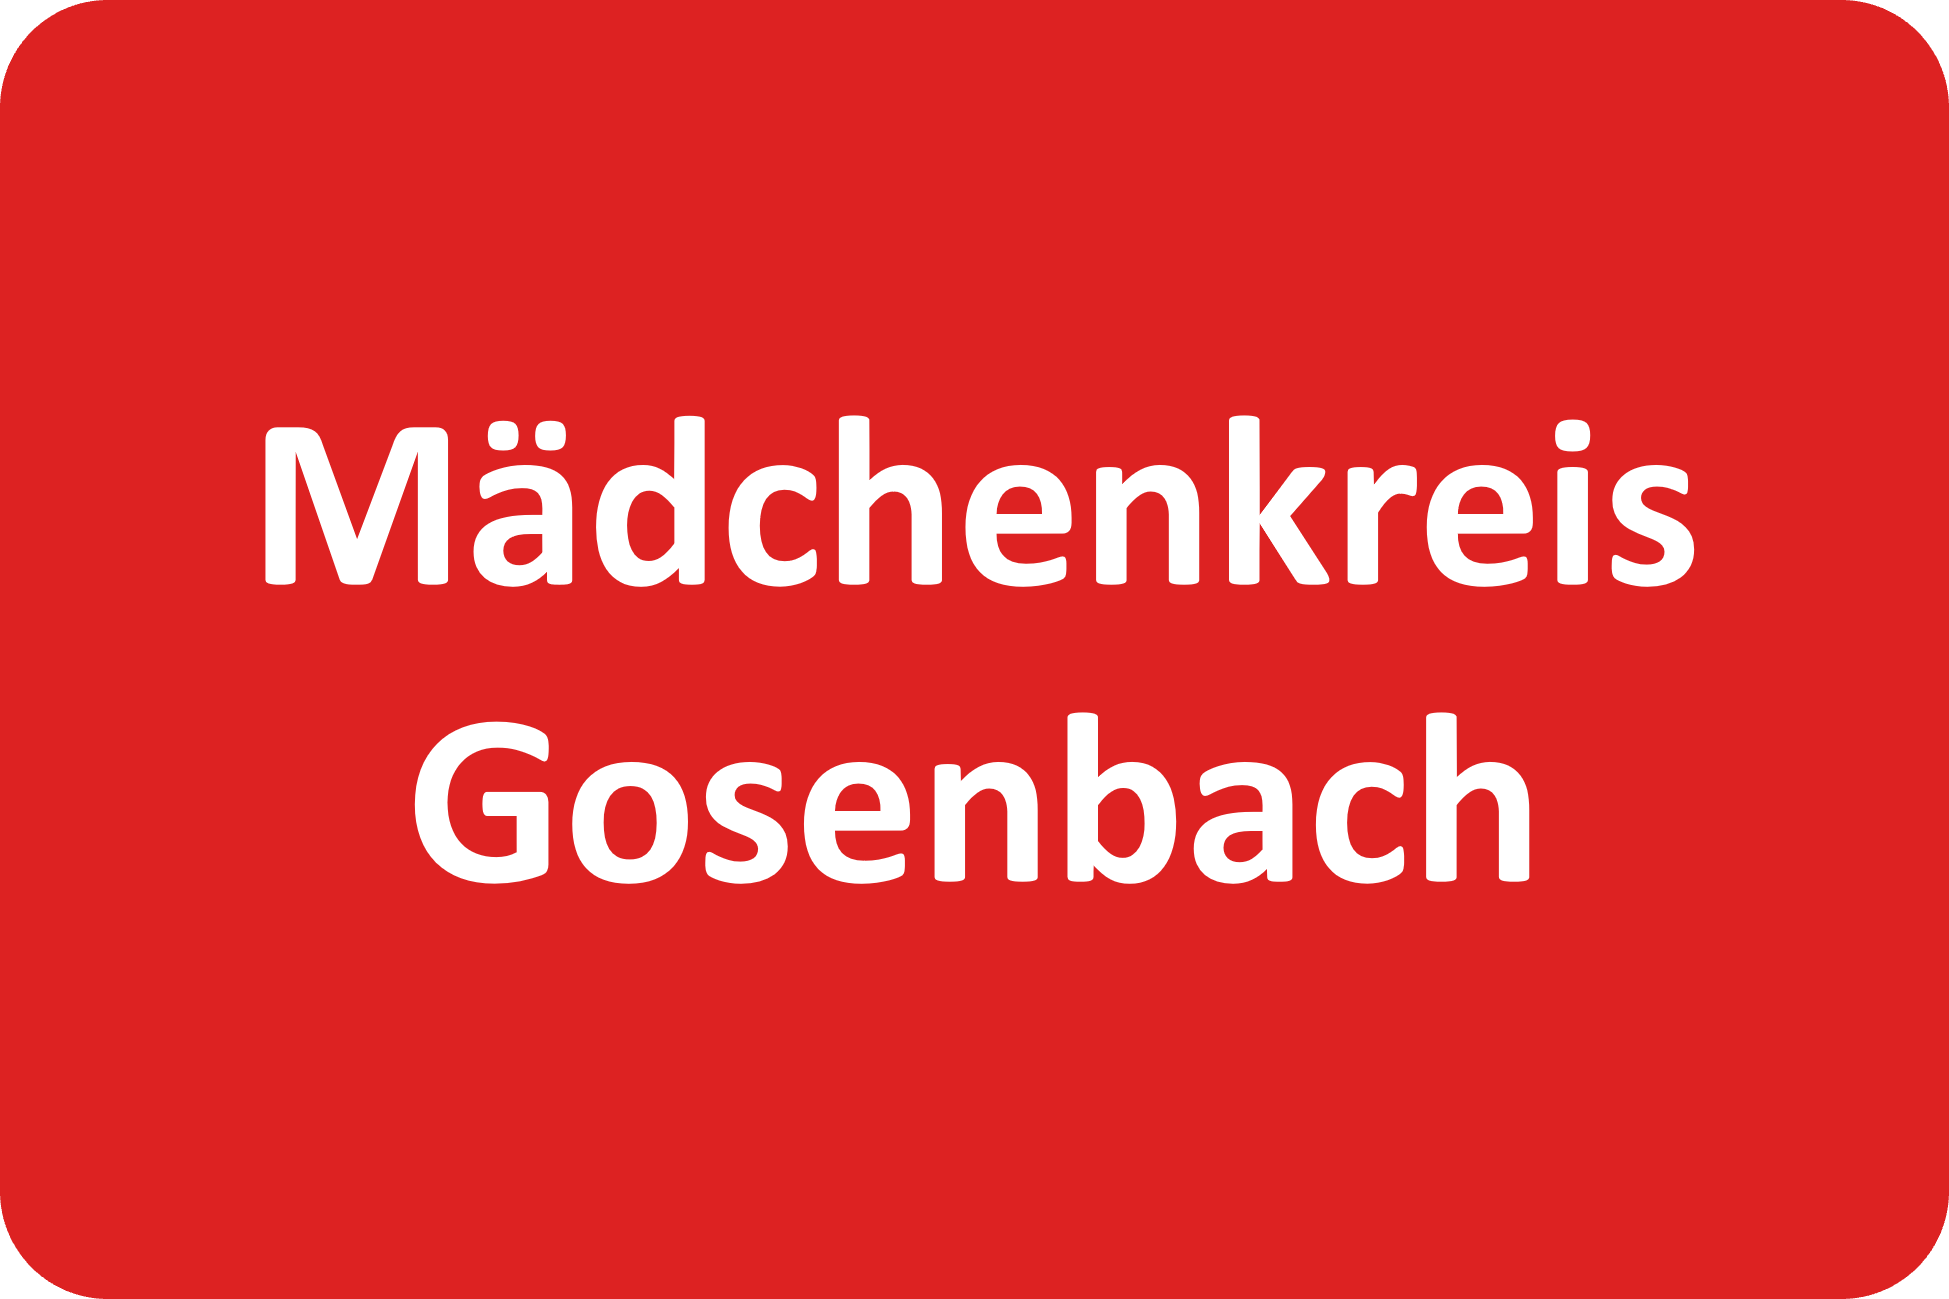 Mädchenkreis Gosenbach